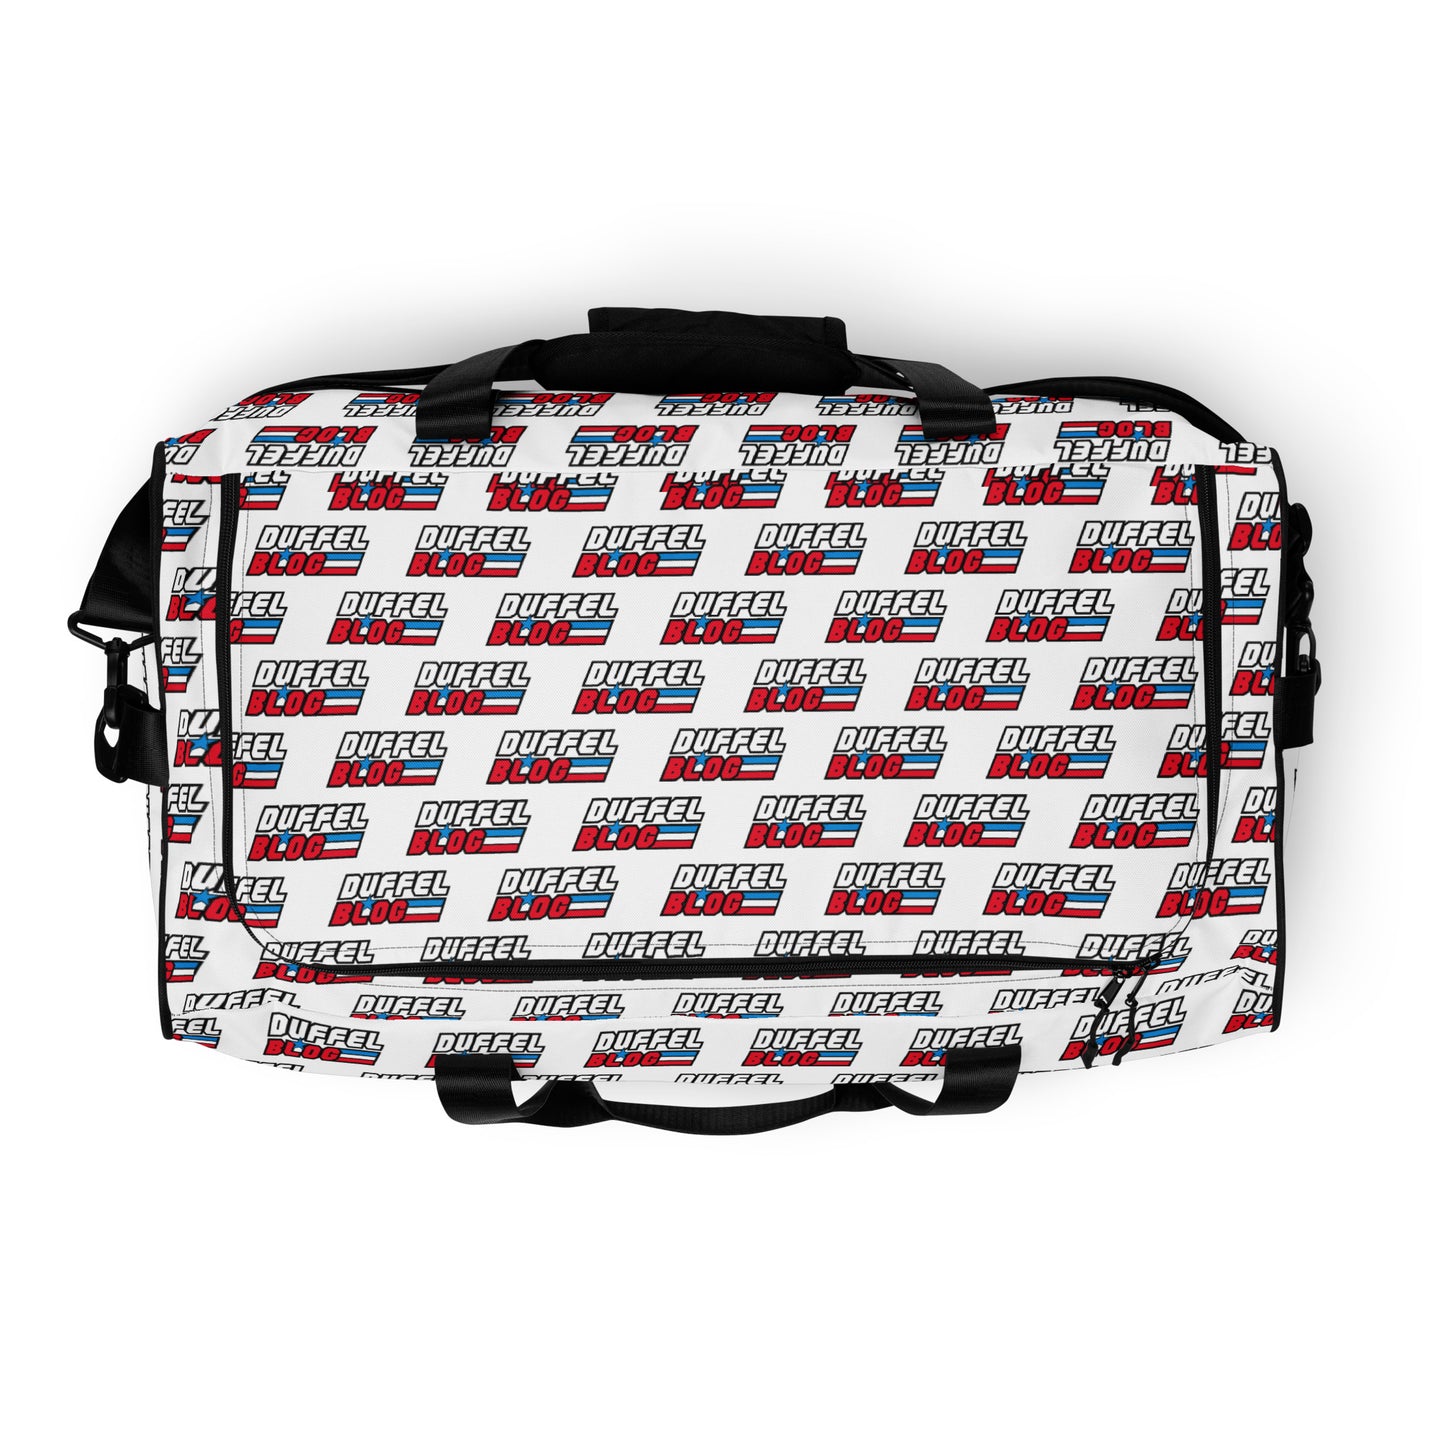 The Duffel Blog duffel bag